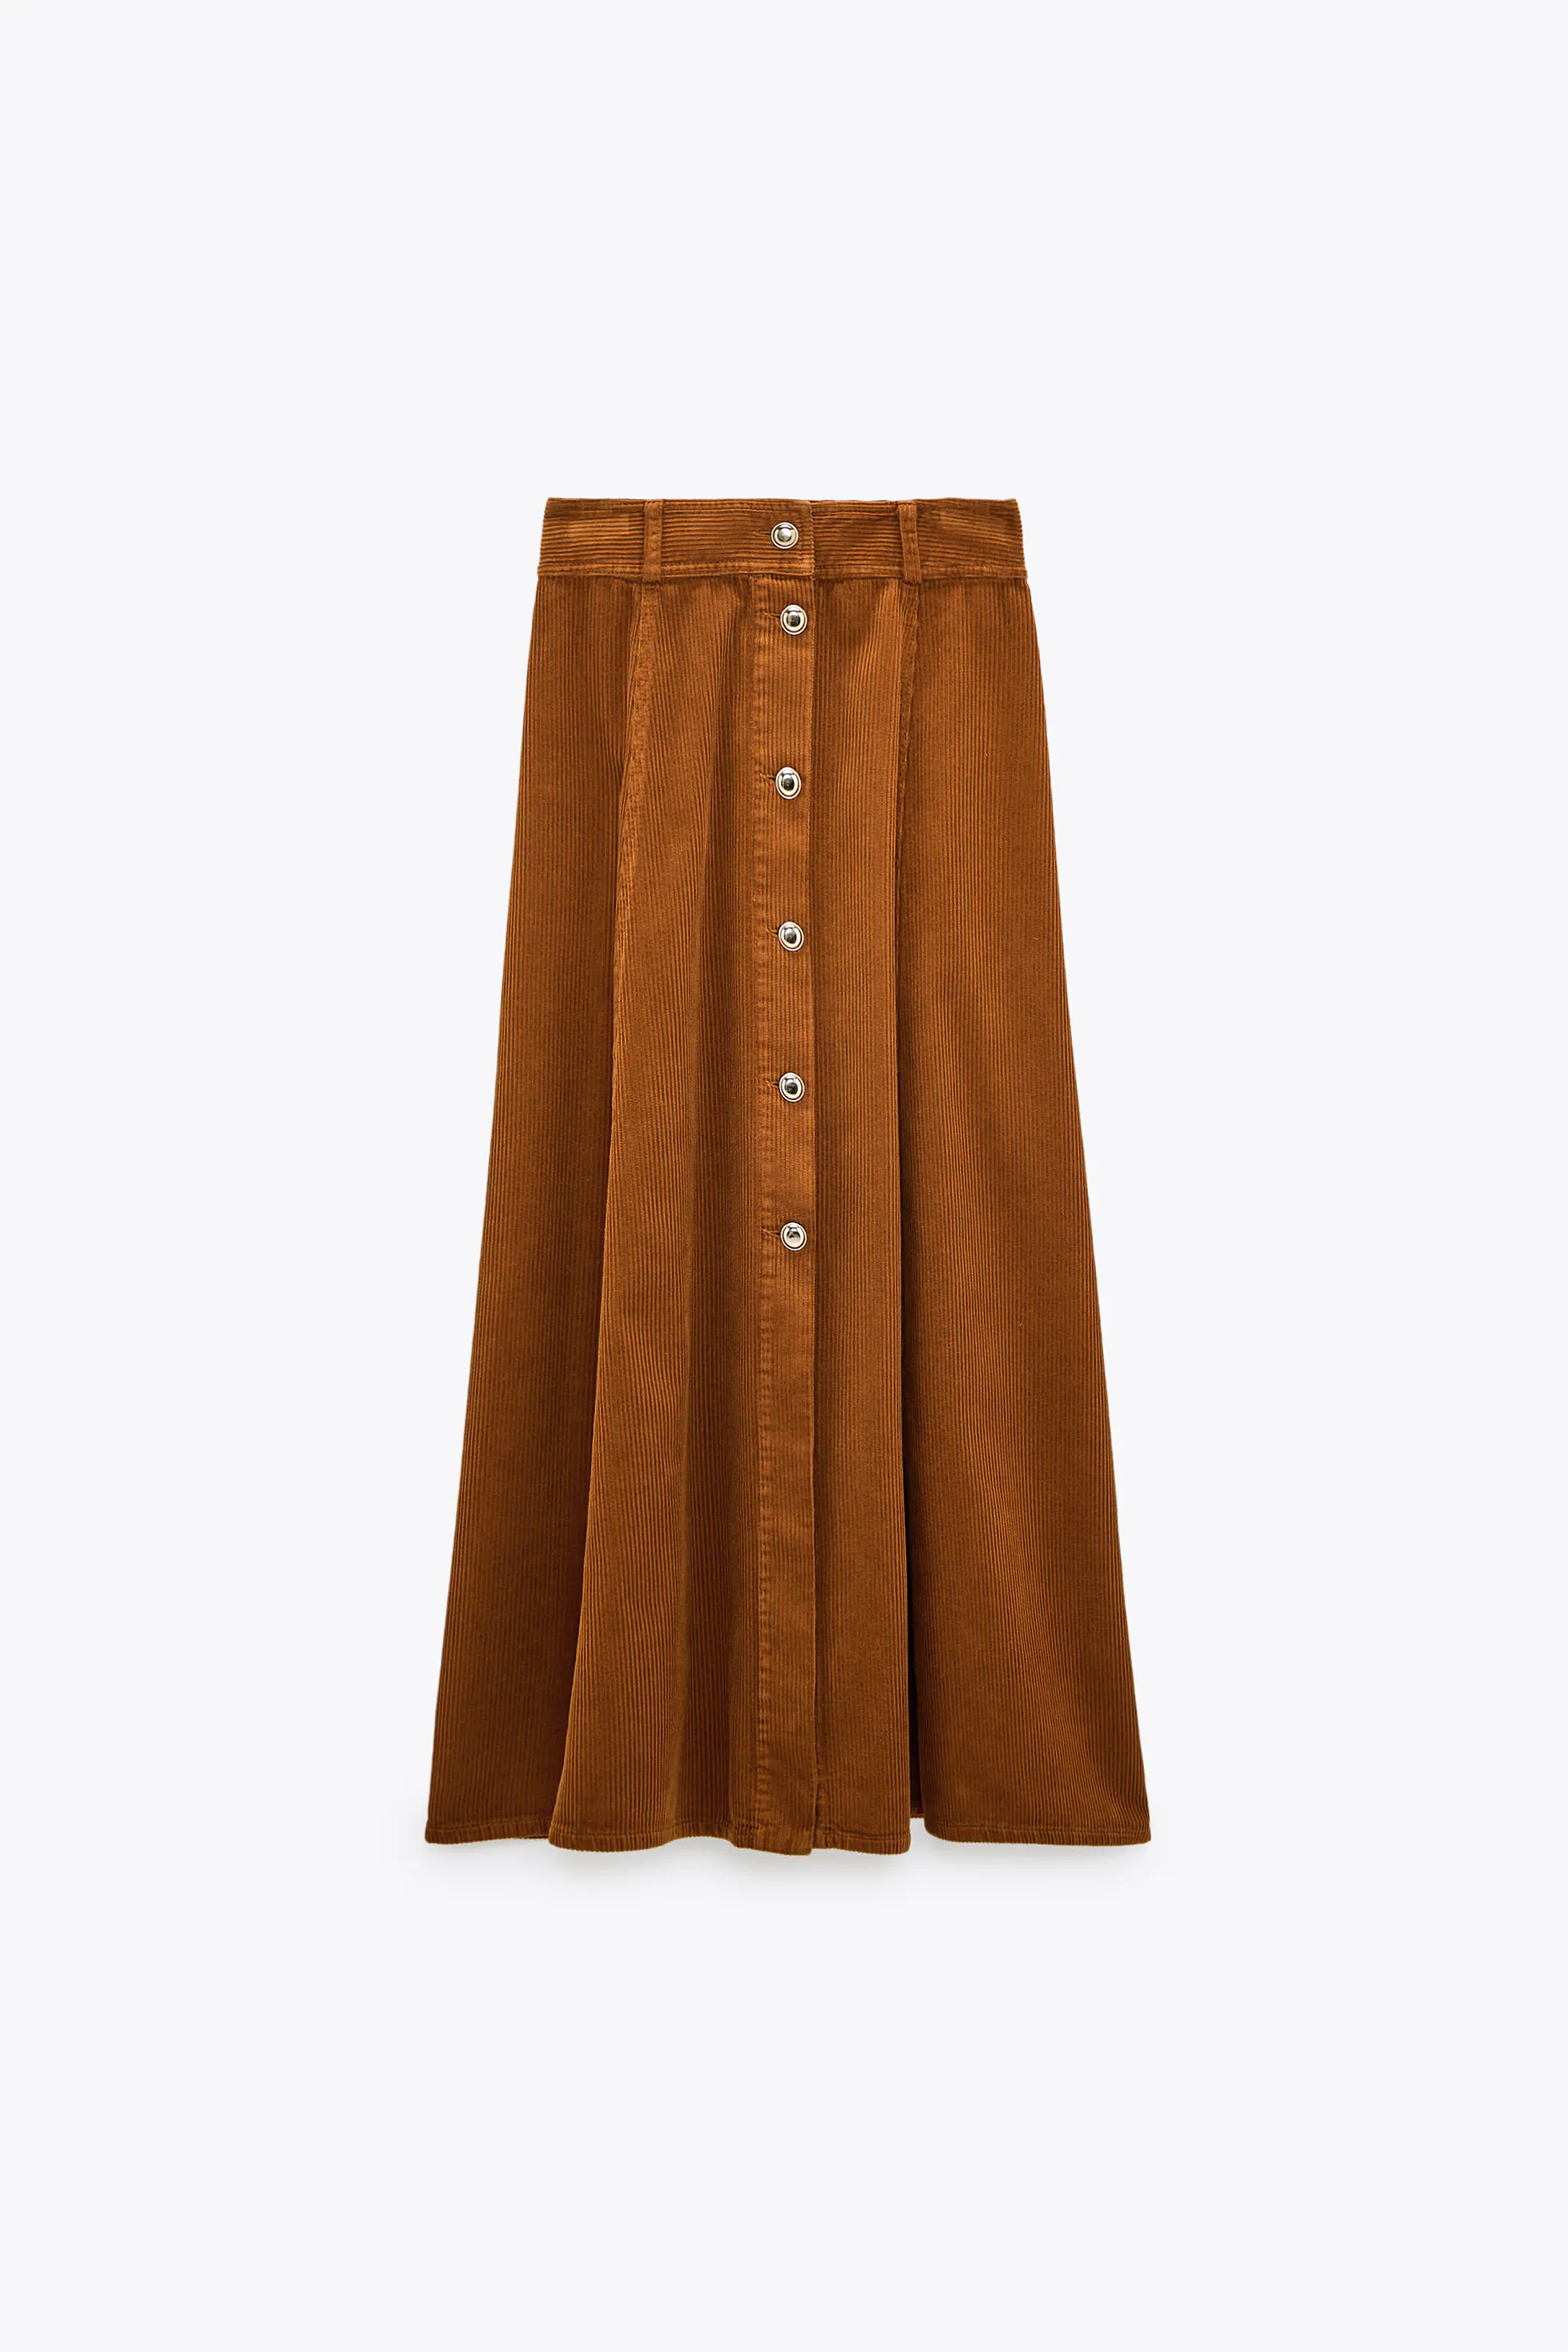 Zara + Corduroy Midi Skirt